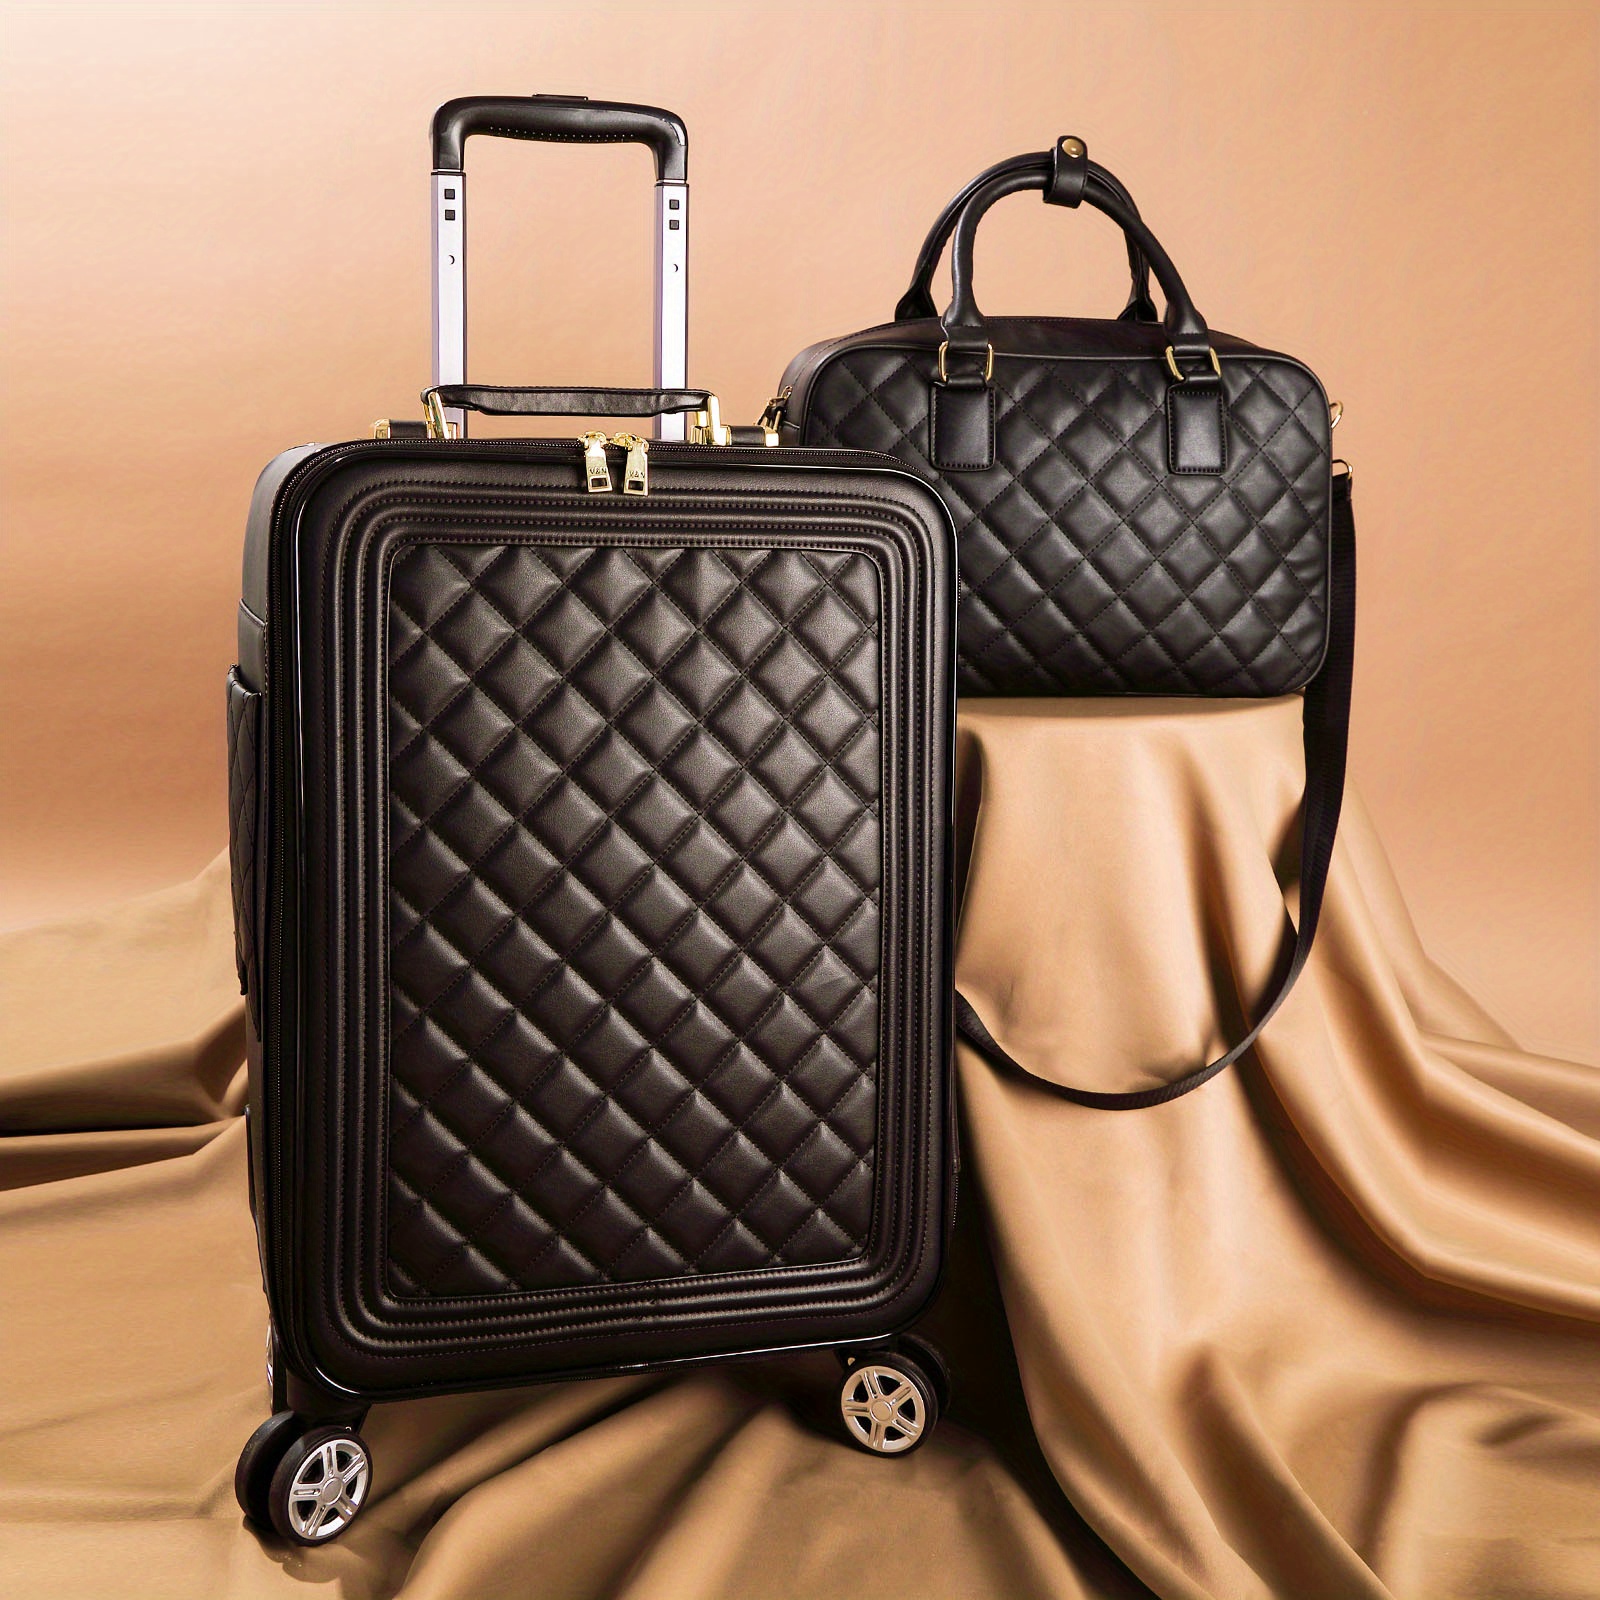 Portable Large Capacity Luggage Suitcase Set, Argyle Quilted